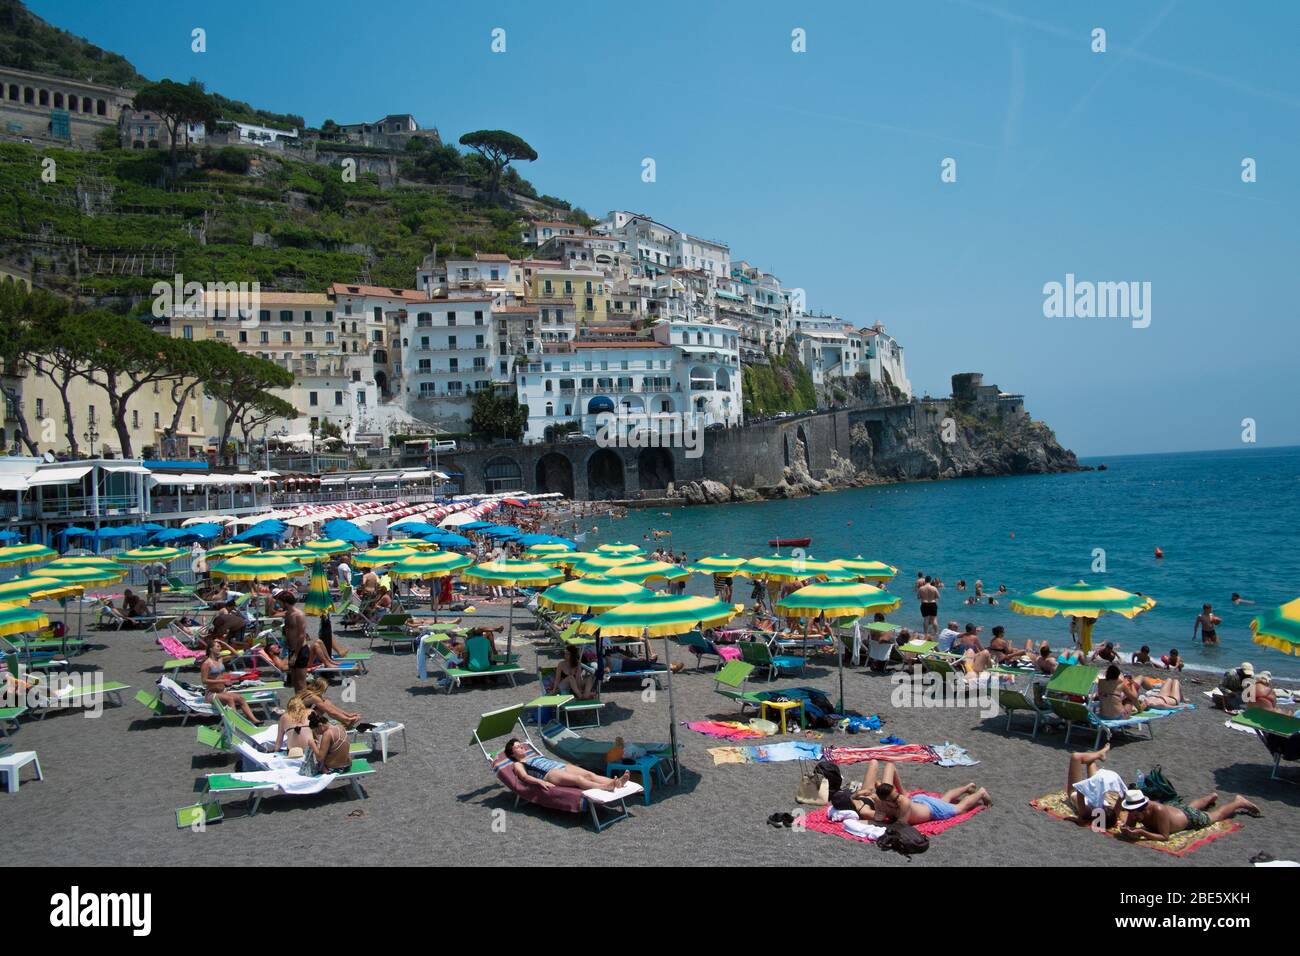 Sunbather sunbathing on the seaside of the Amalfi Coast, Italy Stock Photo